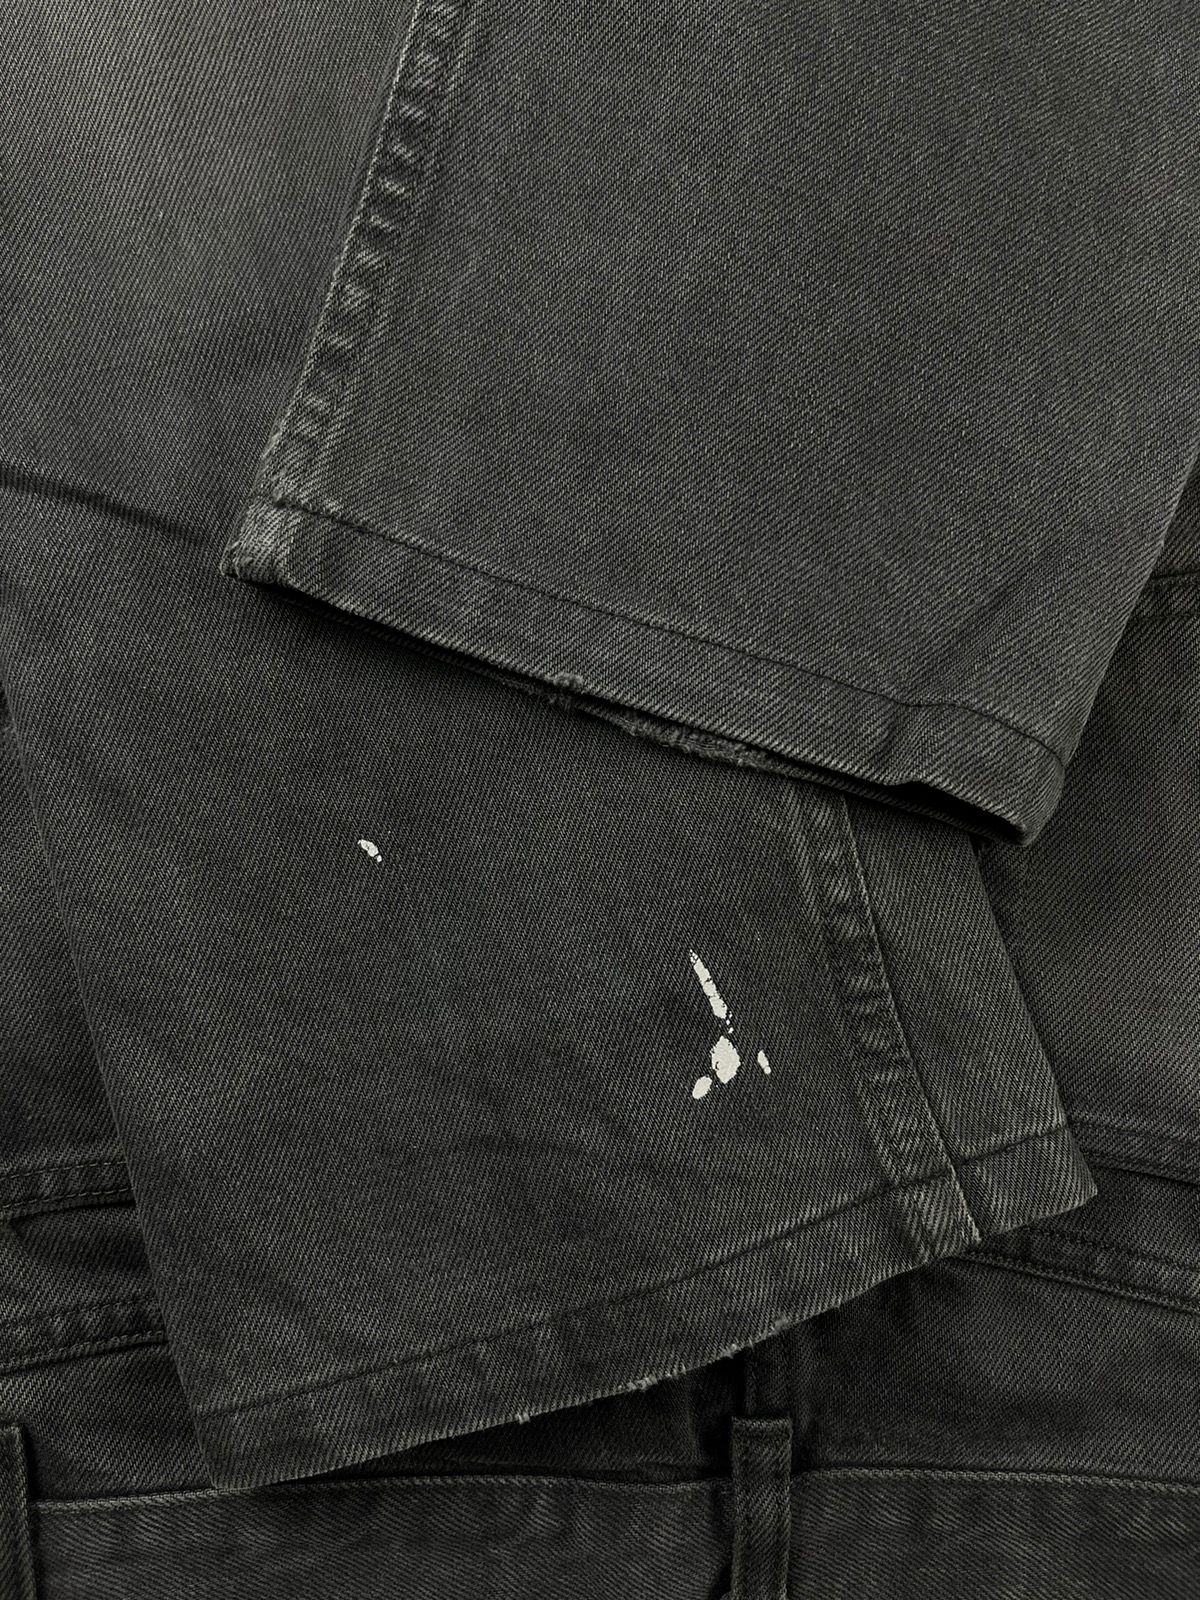 Vintage AW00 Helmut Lang Charcoal Bootcut Painter Denim Jeans Size US 27 - 8 Thumbnail